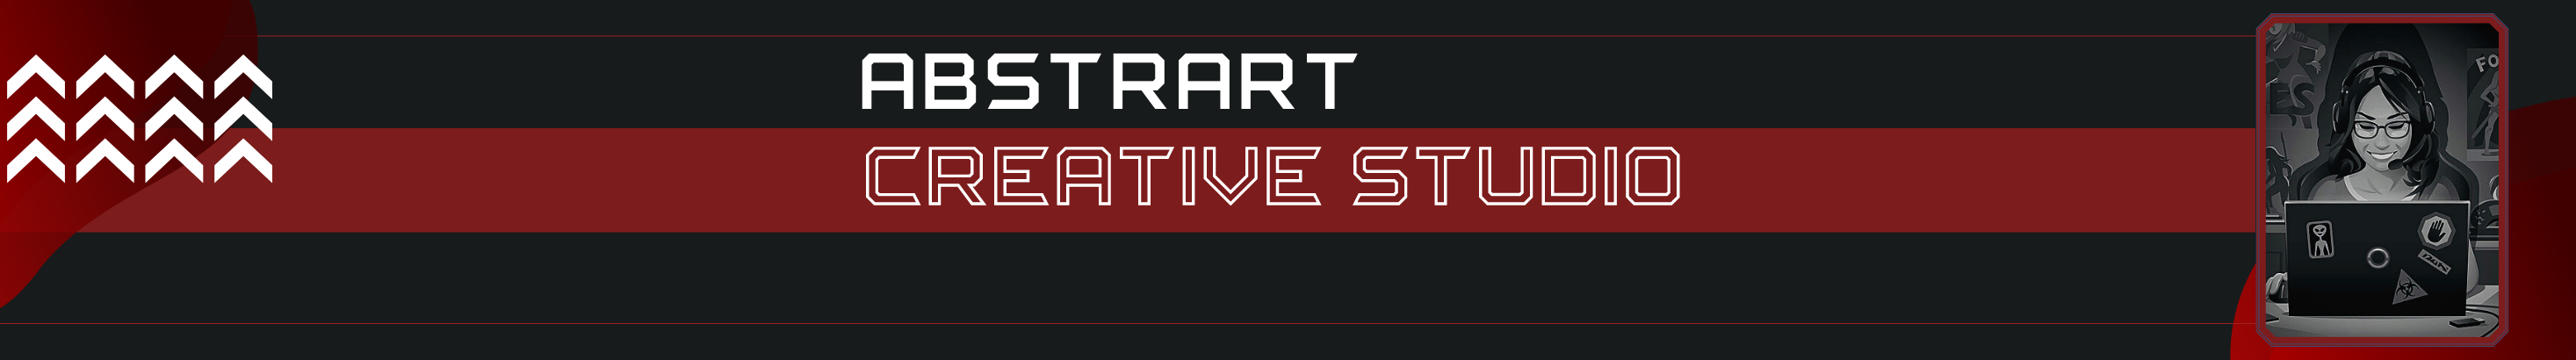 AbstrART Creative Studio's profile banner